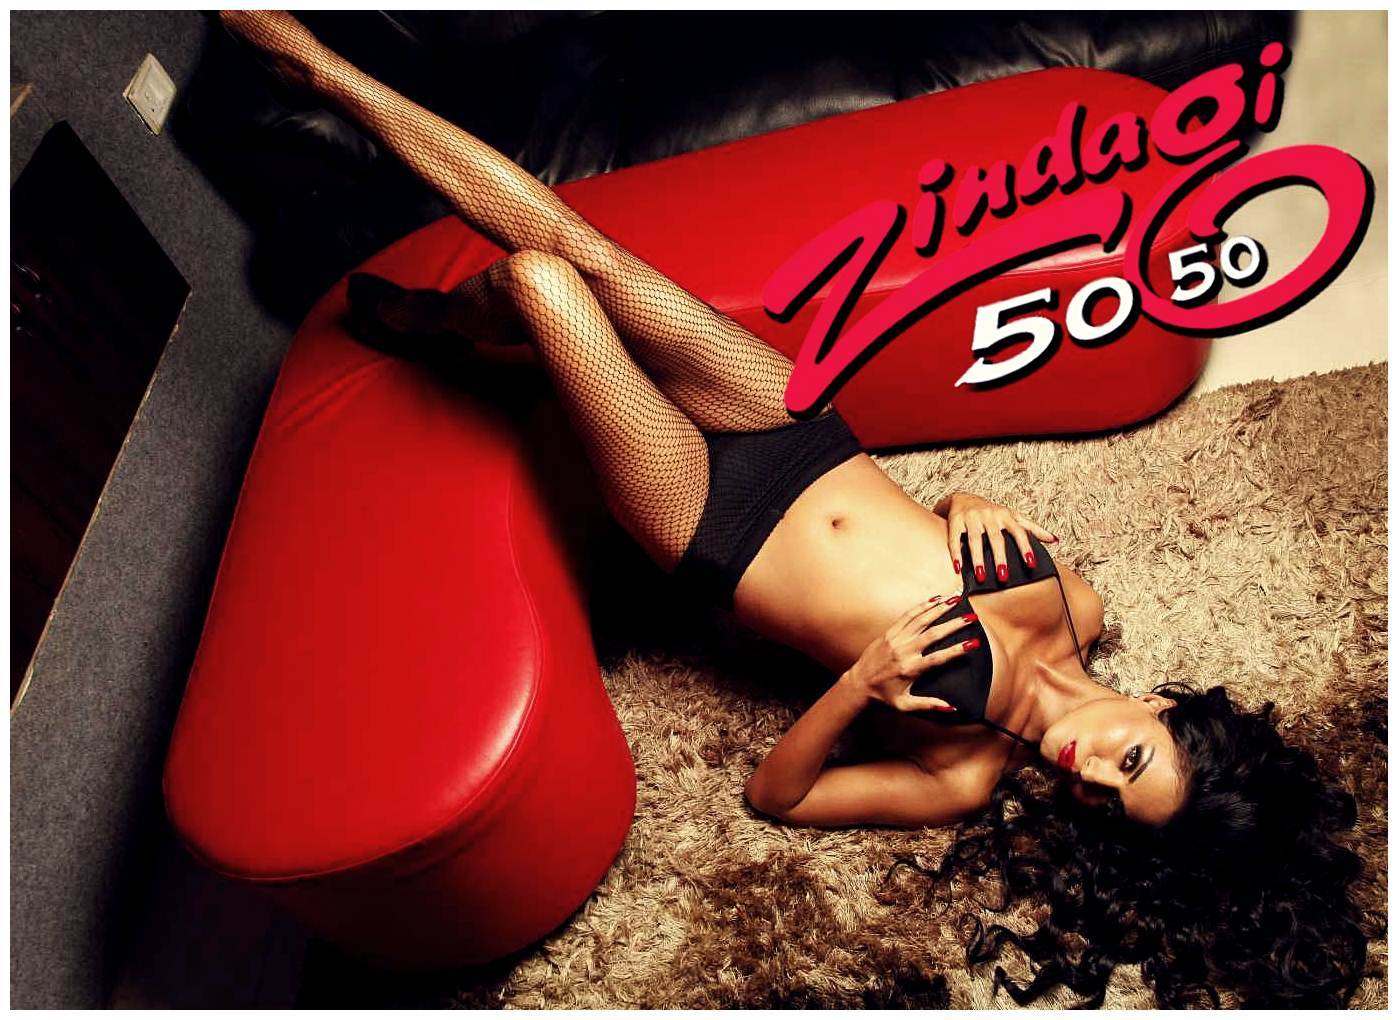 Veena Malik - Veena Malik Steamy and Smoking Hot Photoshoot for Zindagi 50-50 | Picture 448337